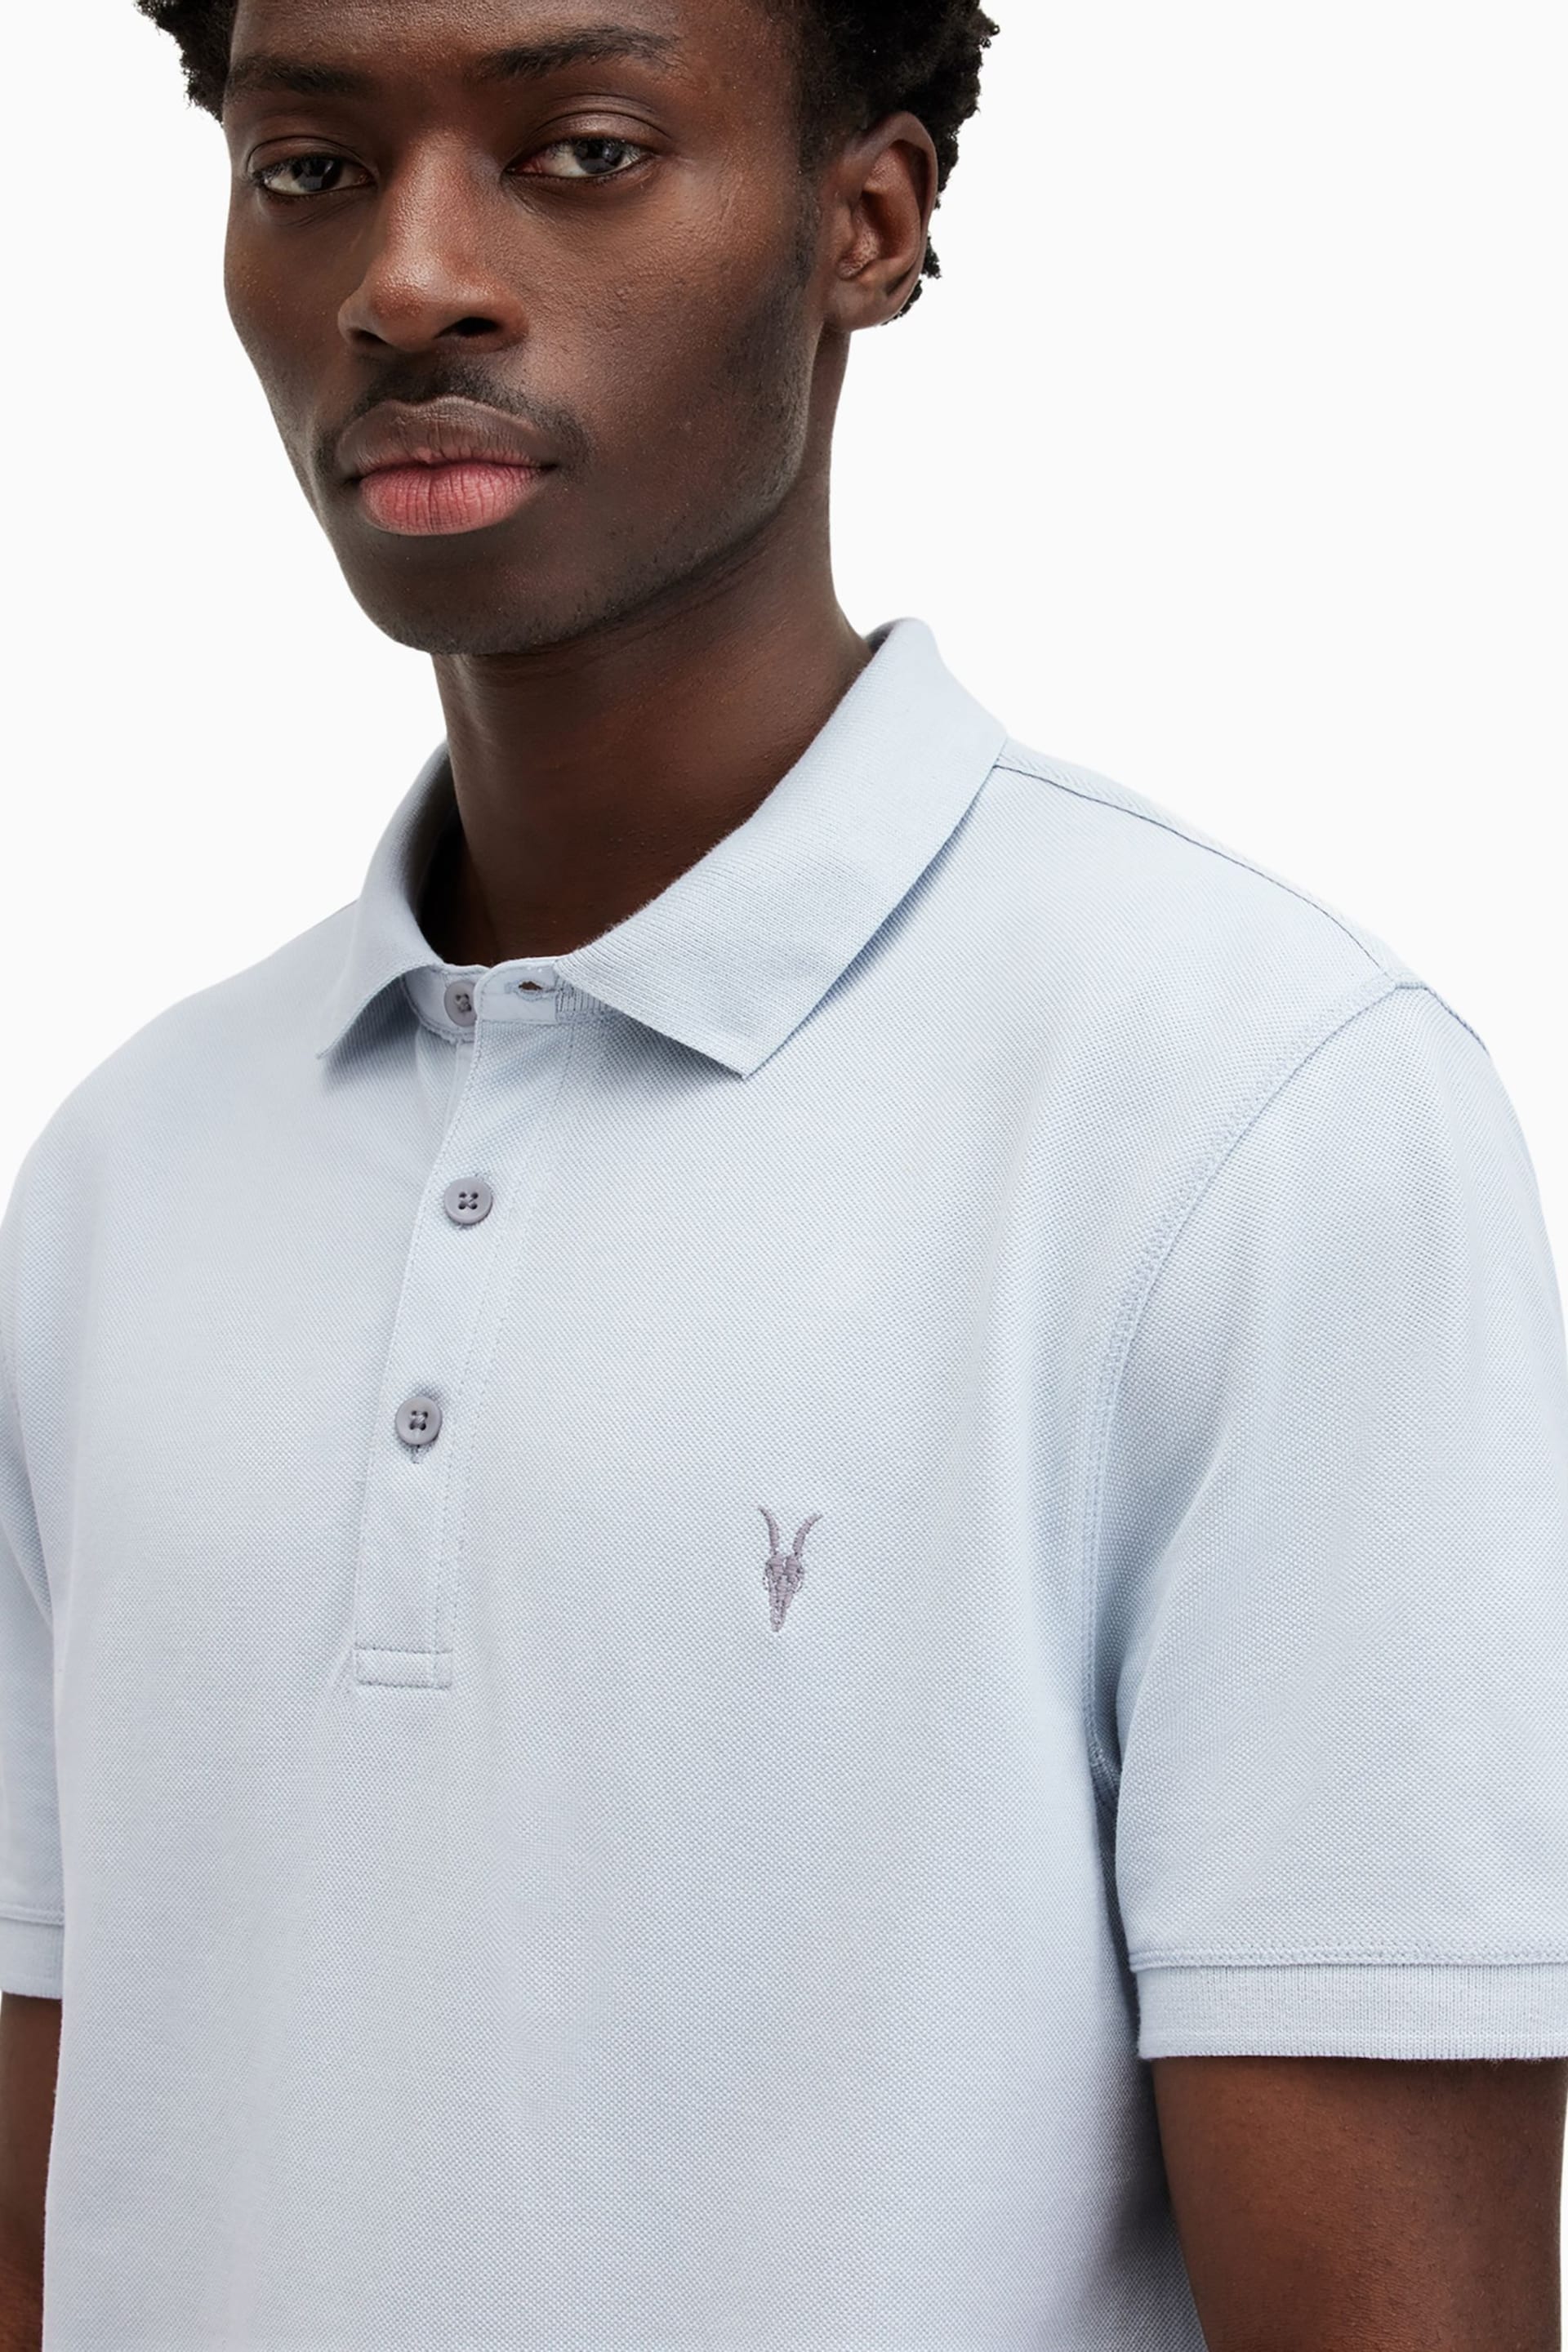 AllSaints Black Reform Short Sleeve Polo Shirt 2 Pack - Image 4 of 7